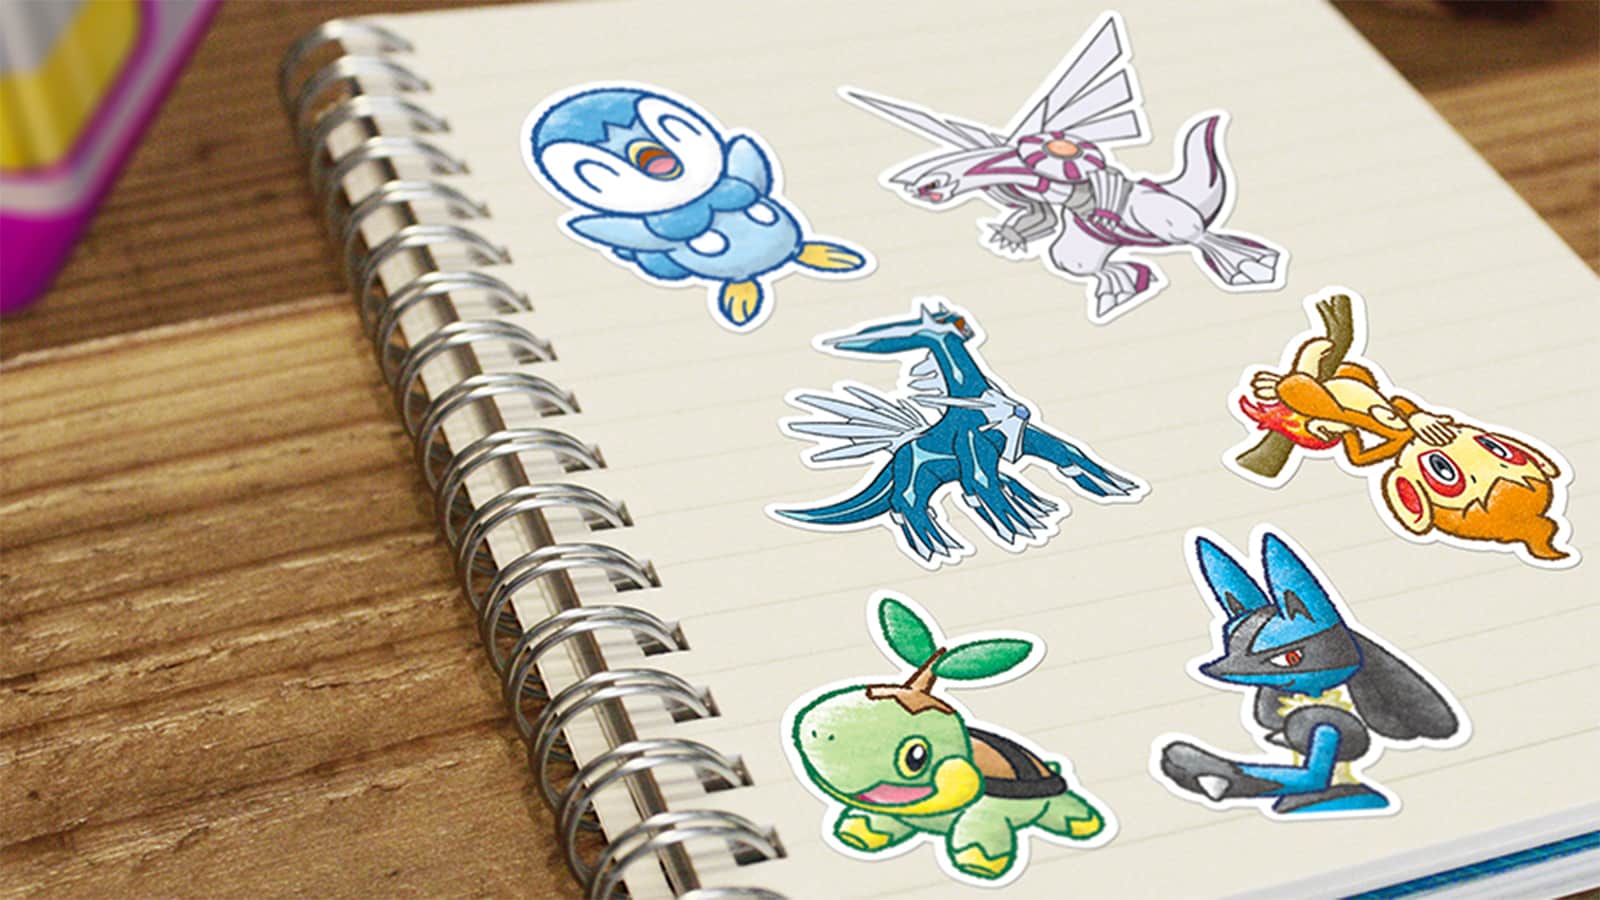 Field Research stickers representing Sinnoh region Pokemon in Pokemon Go